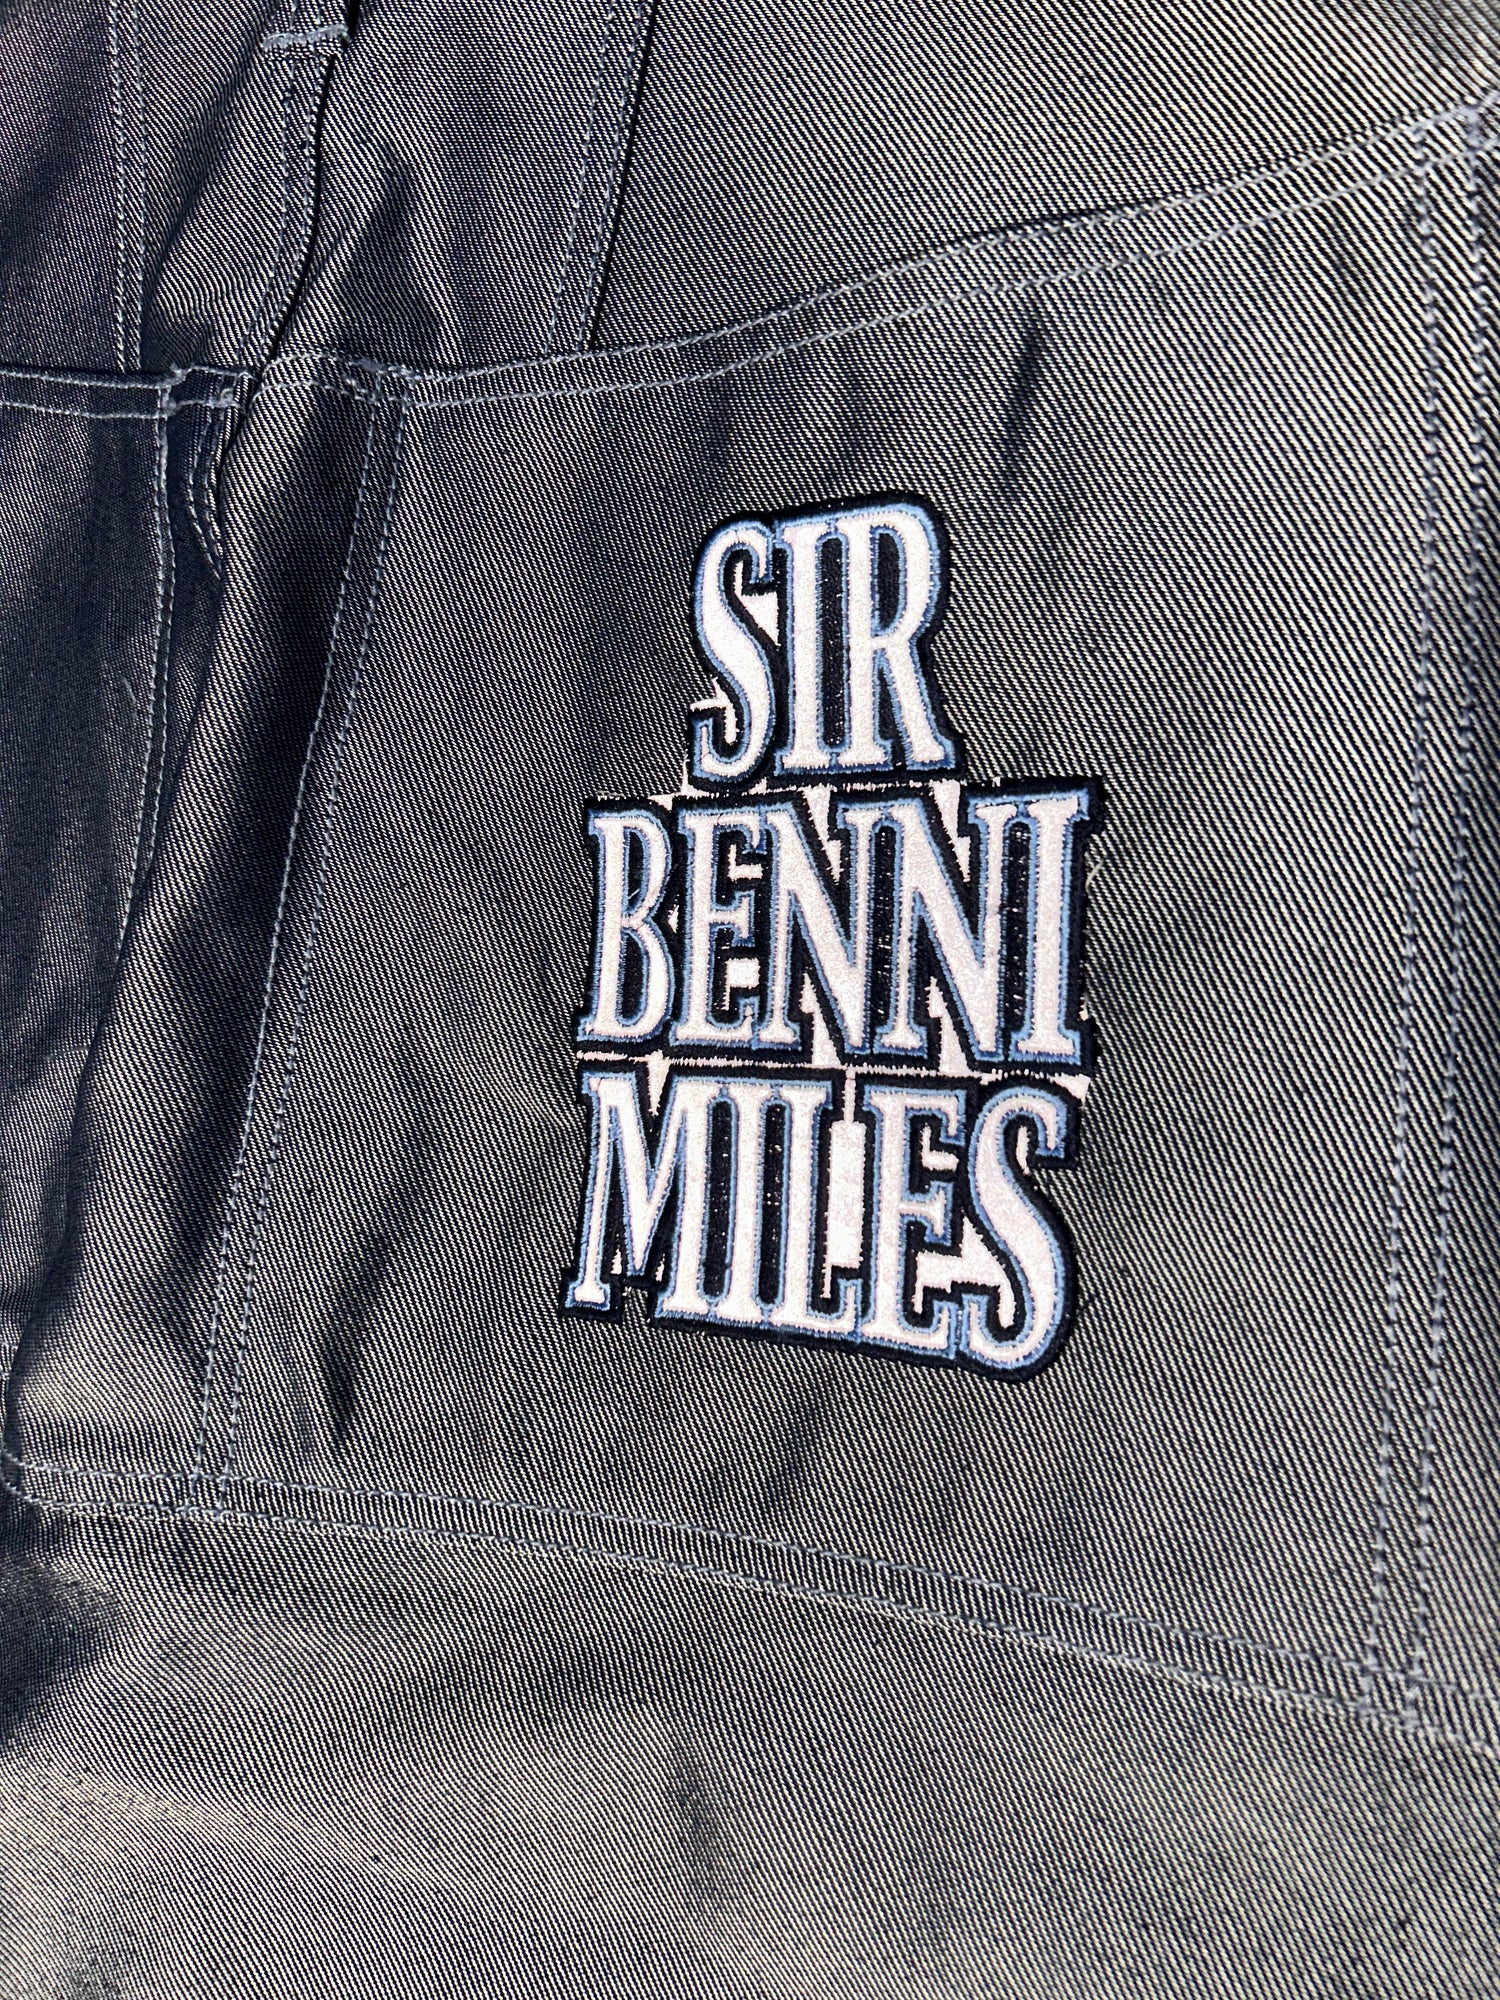 Baggy Jeans Shiny Sir Benni Miles Vintage (32 US M)